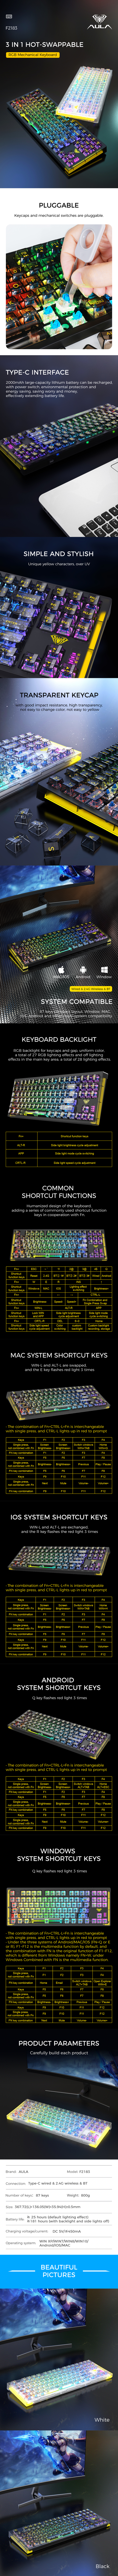 AULA F2183 Three-mode TKL RGB Gaming mechanical Hot-Swappable keyboard (图1)